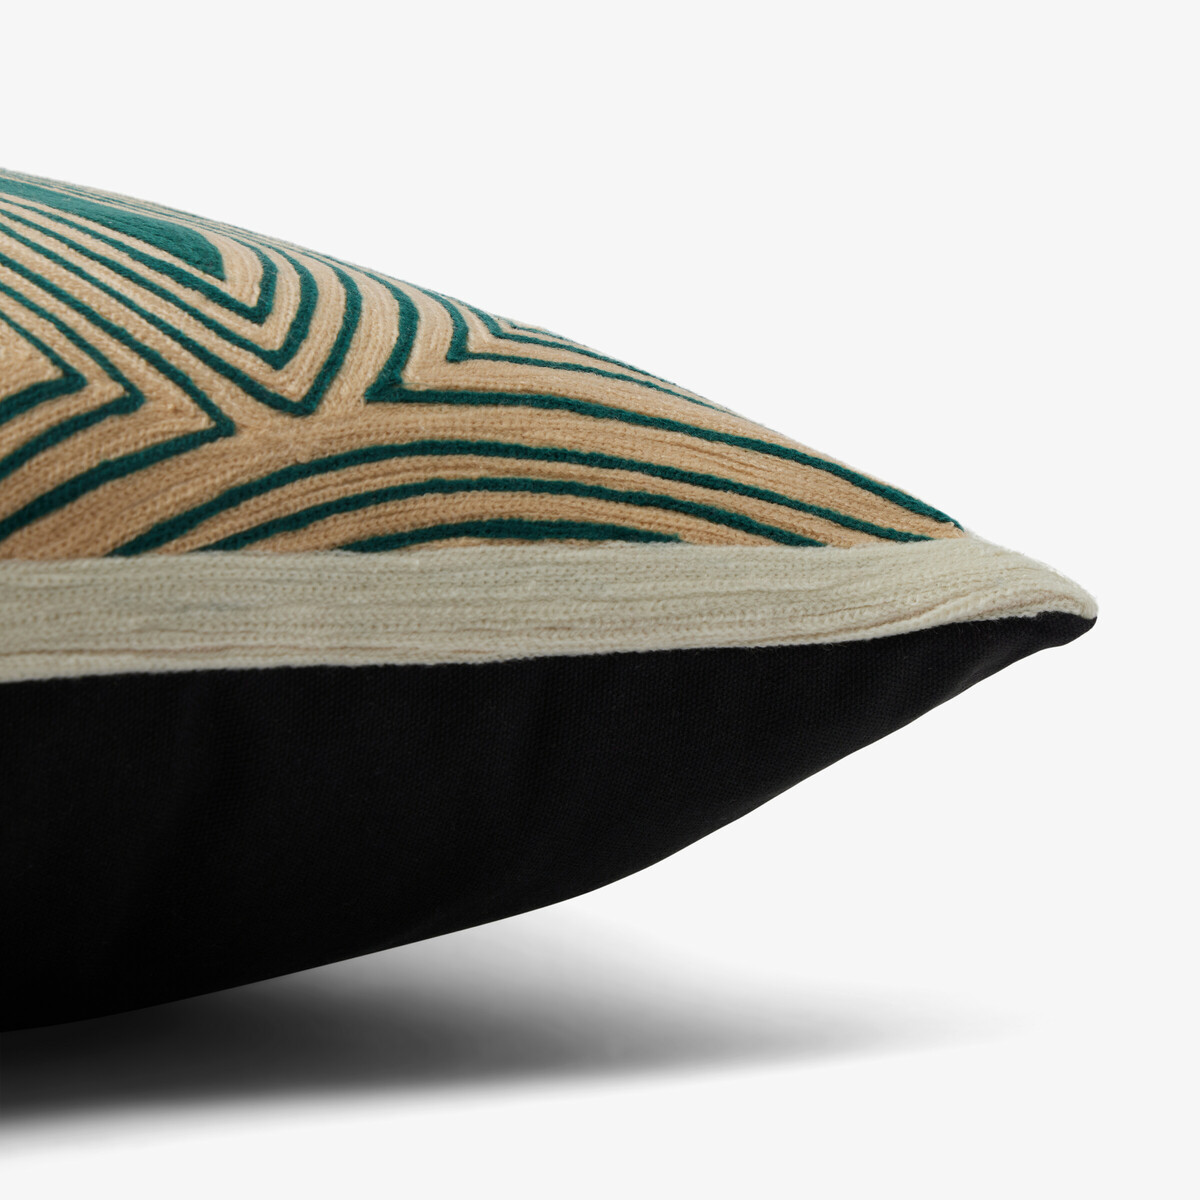 Sombra Cushion, Pine / Lagoon - 55 x 40 cm - image 2